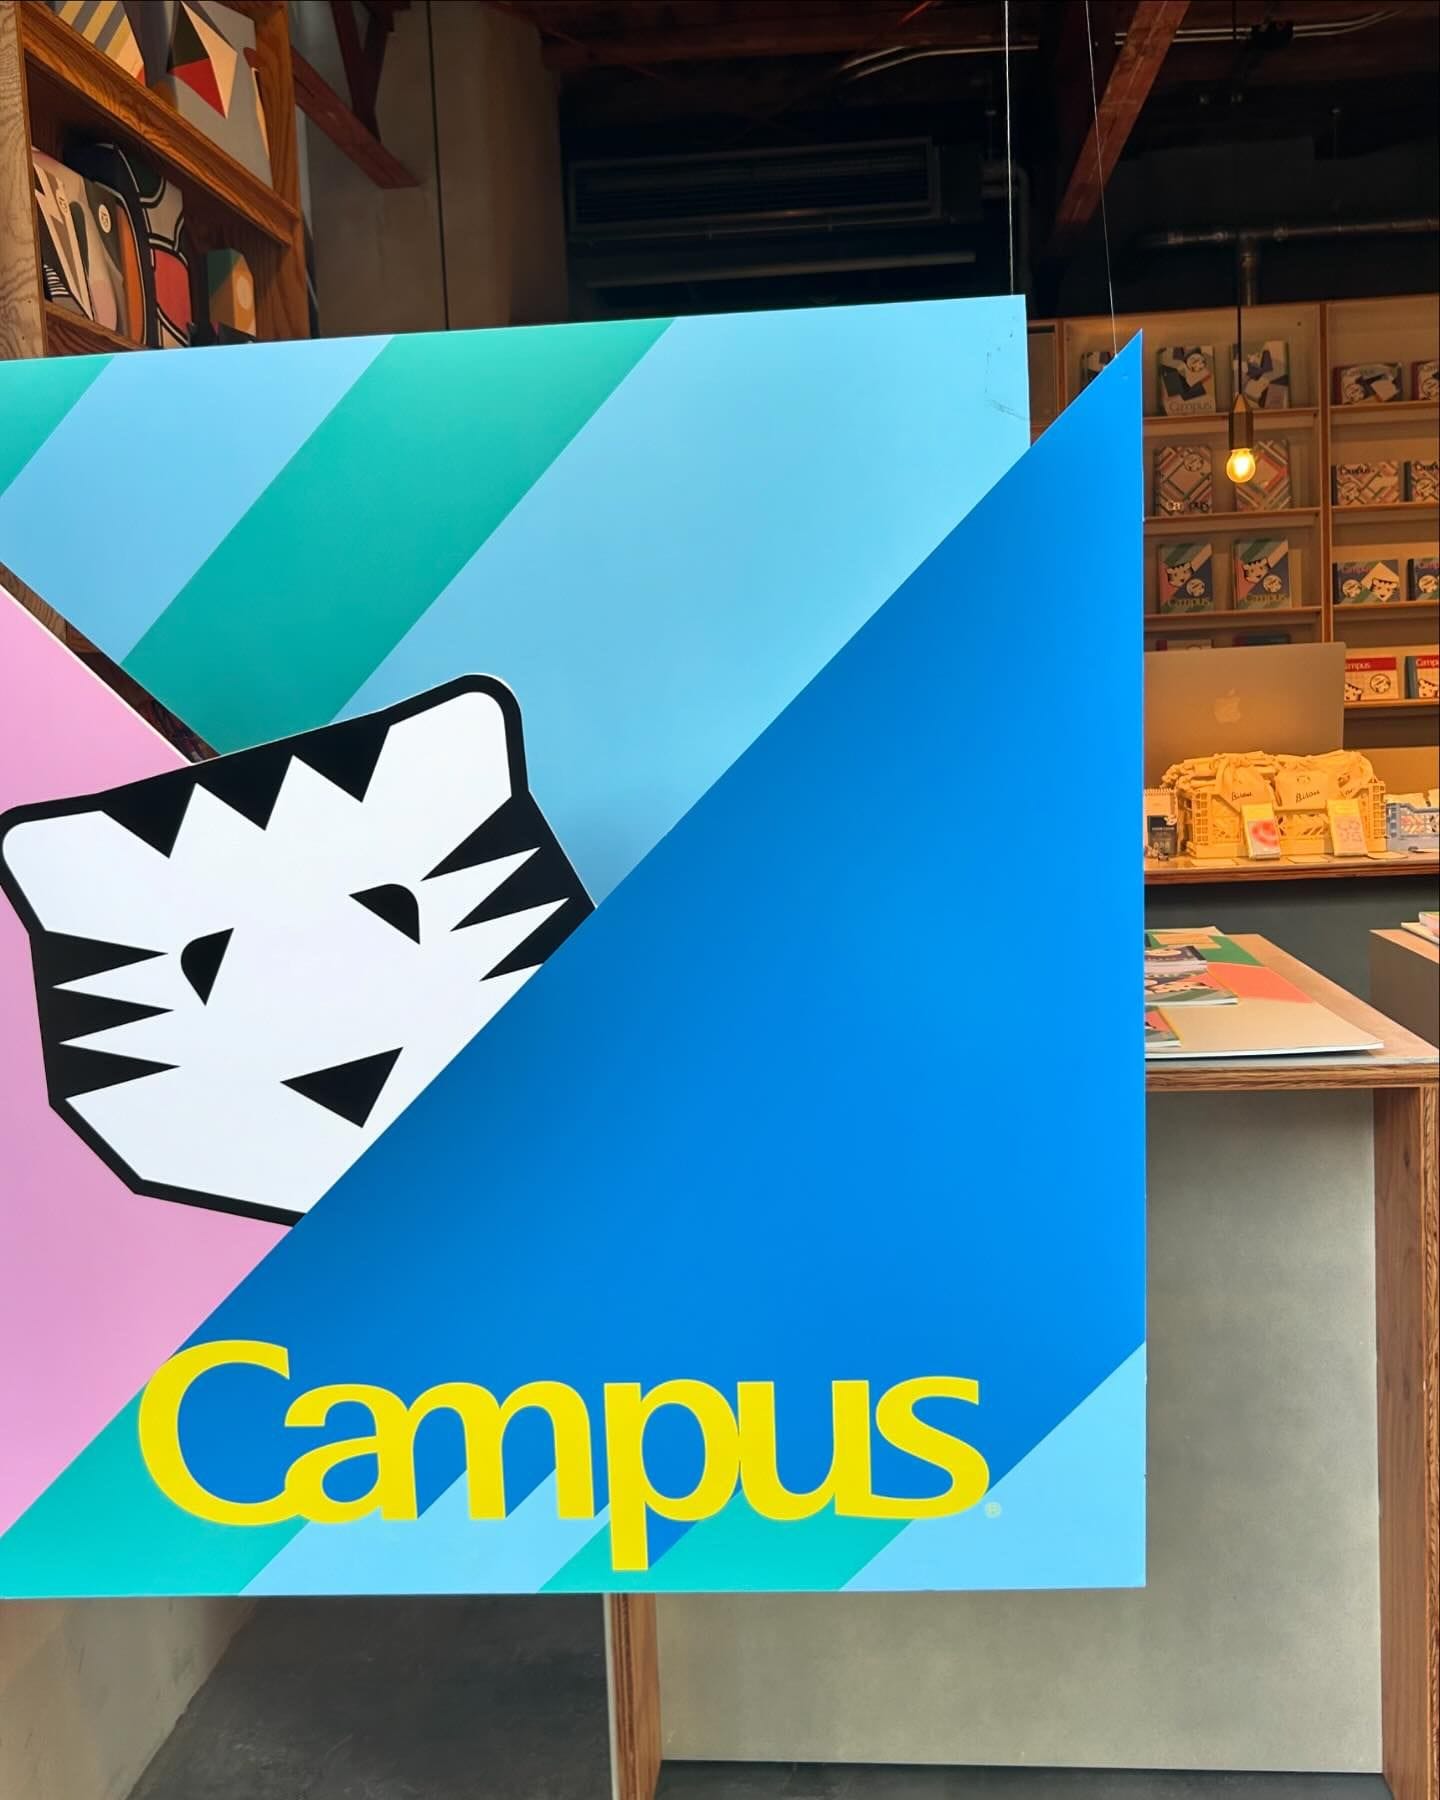 「Campus＋PAPIER TIGRE 」コラボレーションアイテム